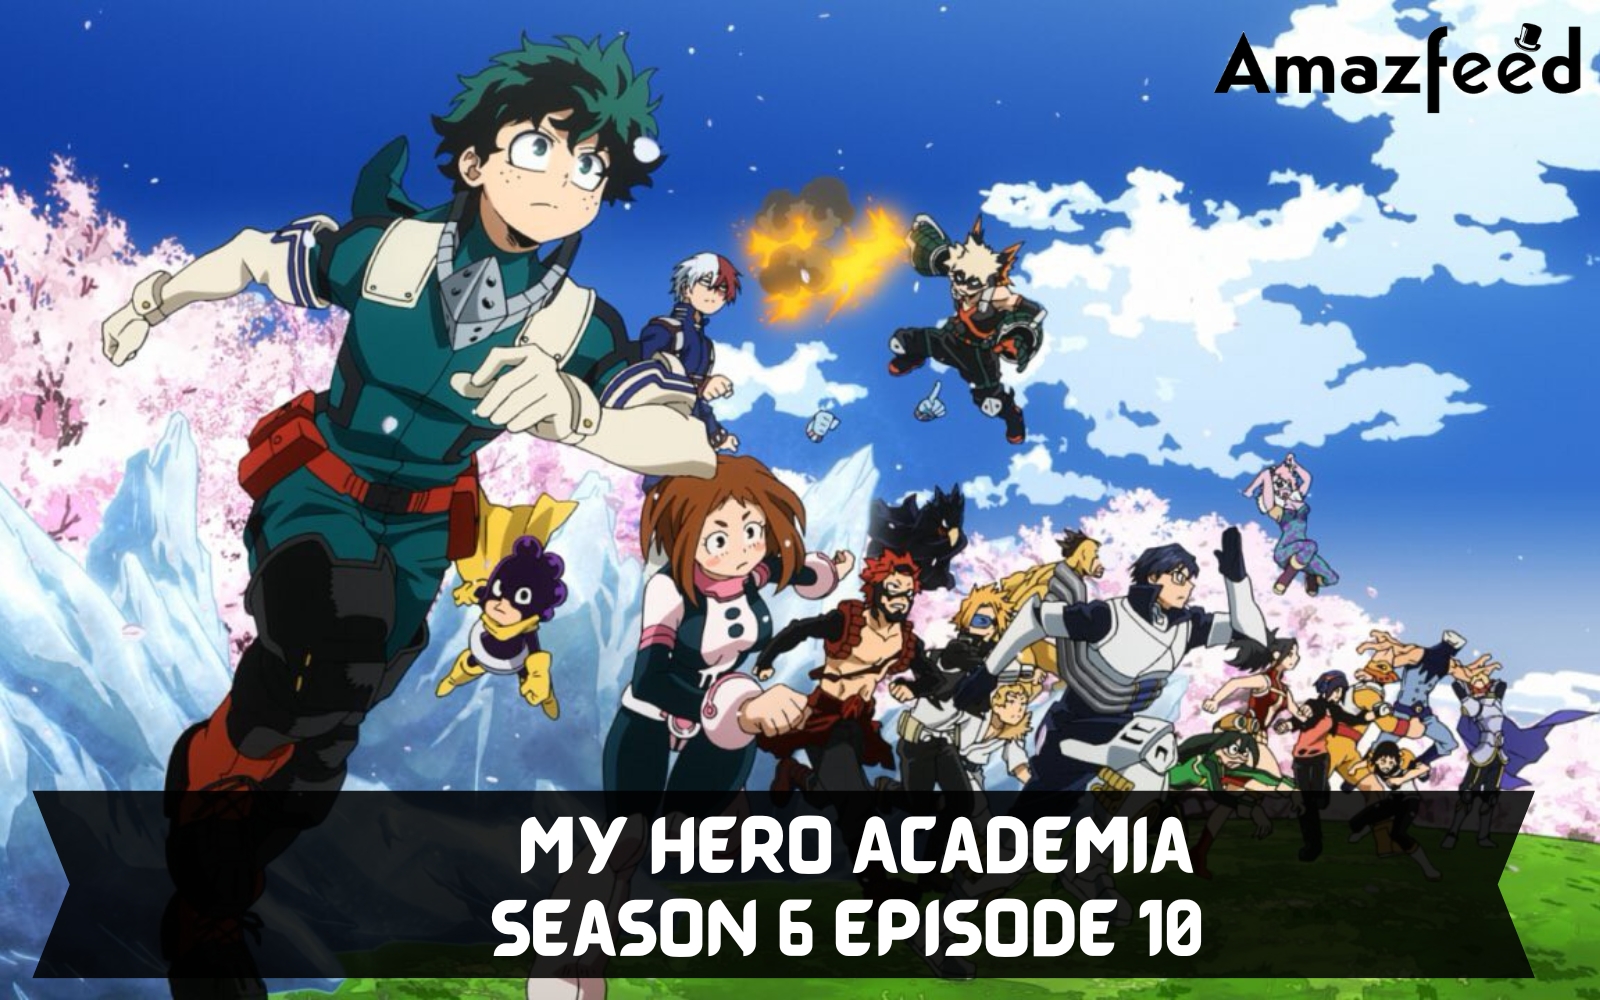 My Hero Academia Season 6 Episode 10